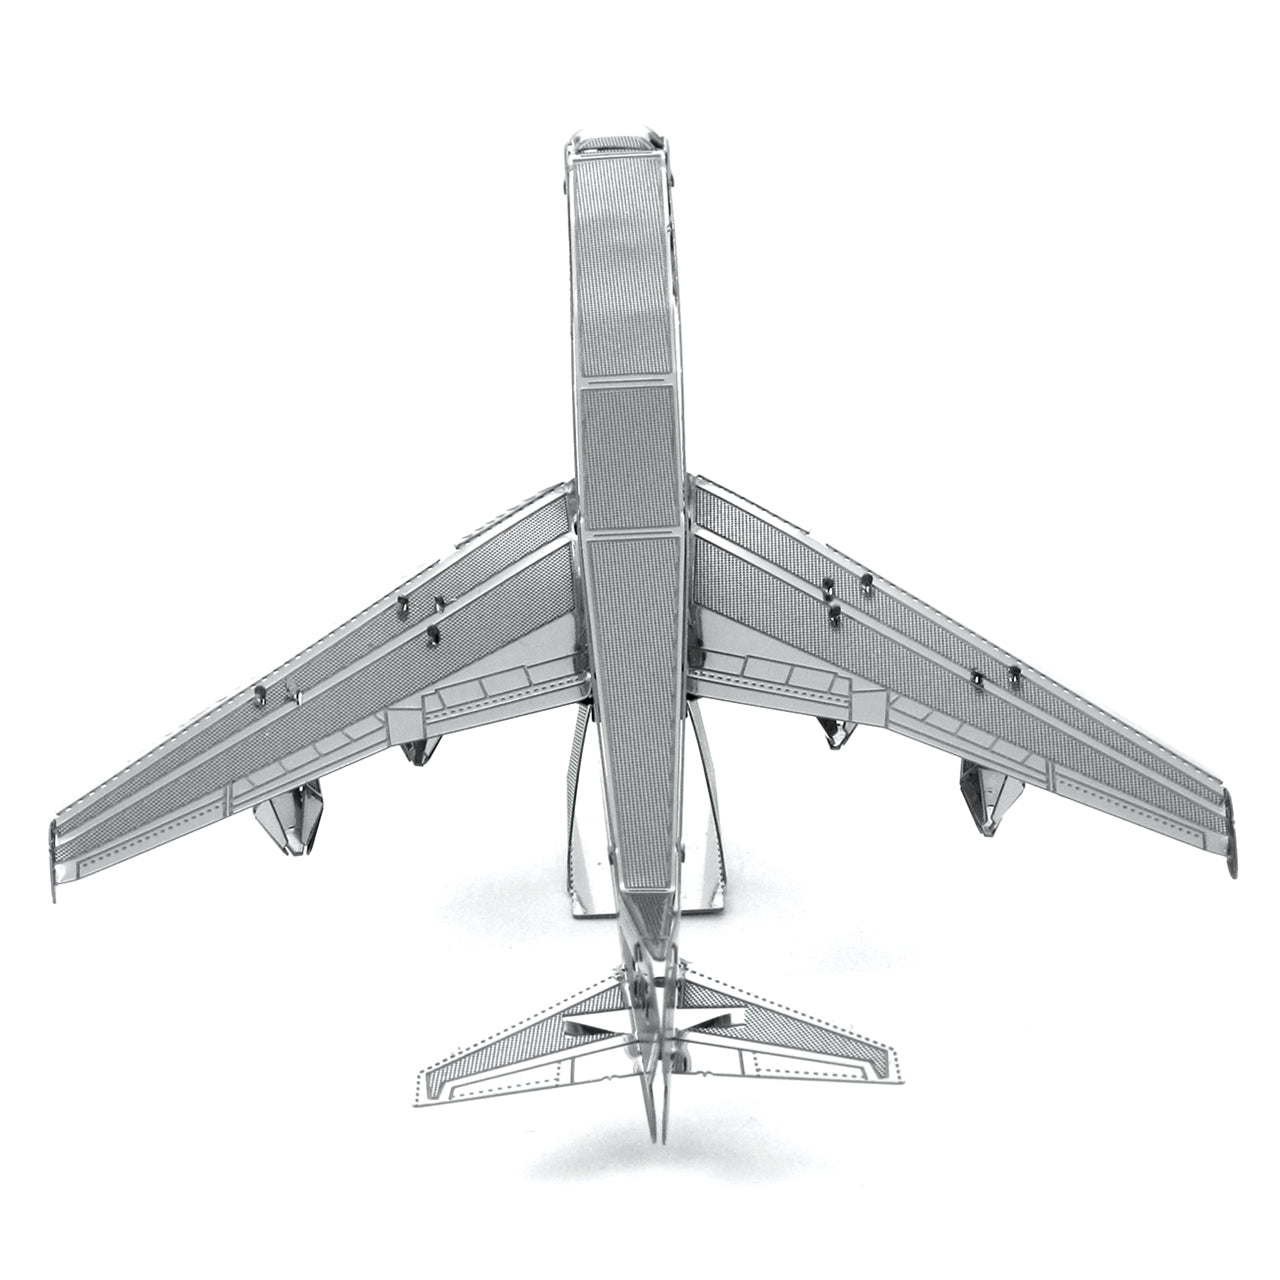 FMW004 Jumbo Jet Airplane (Buildable) 